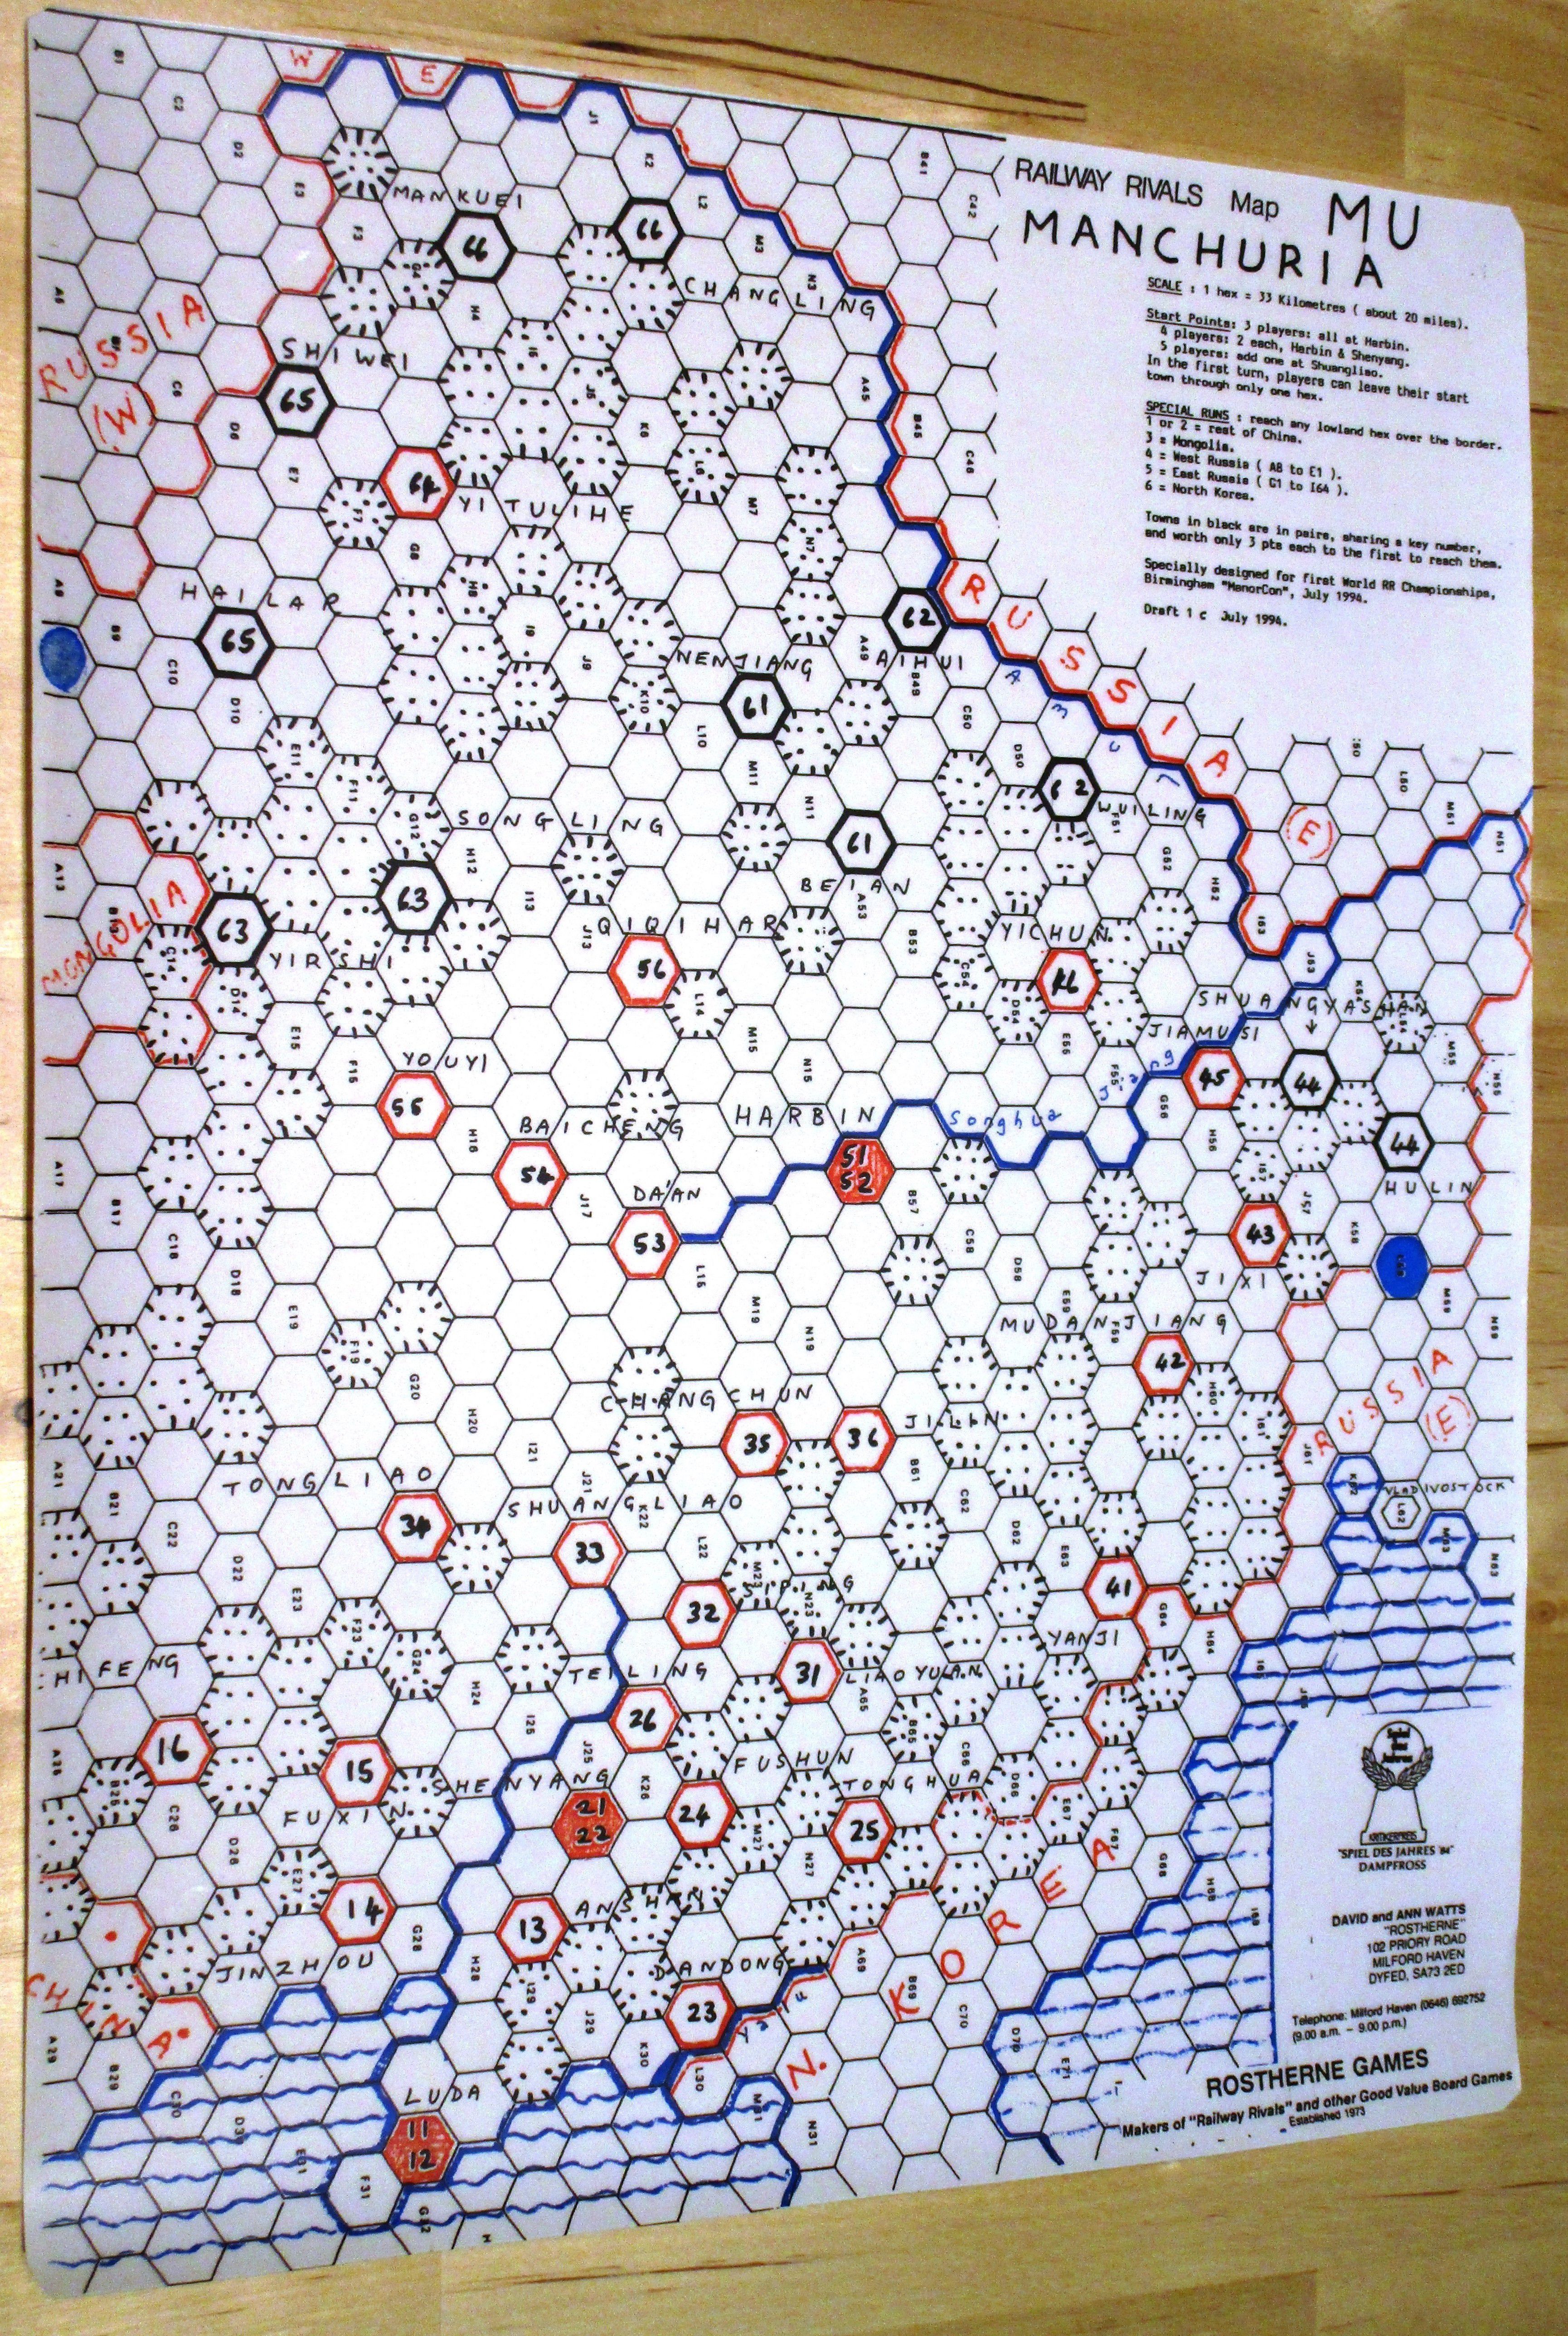 Railway Rivals Map MU: Manchuria